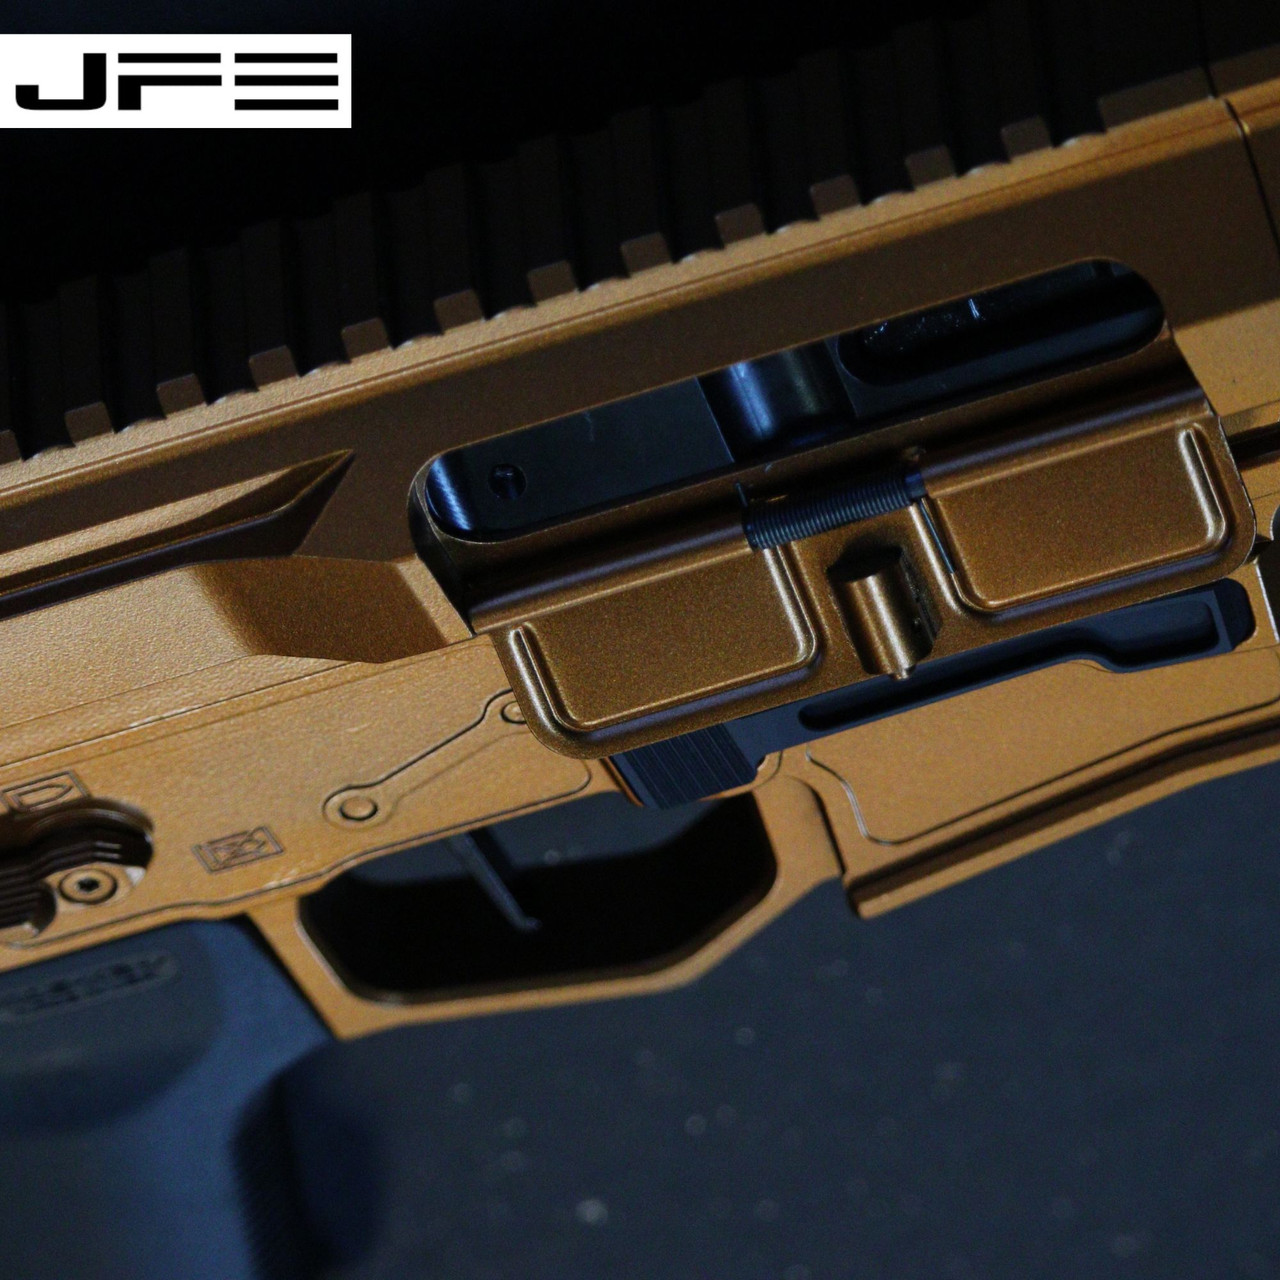 MIDNIGHT BRONZE Cerakote OEM complete mil-spec lower part kit with pistol  grip ( LPK )